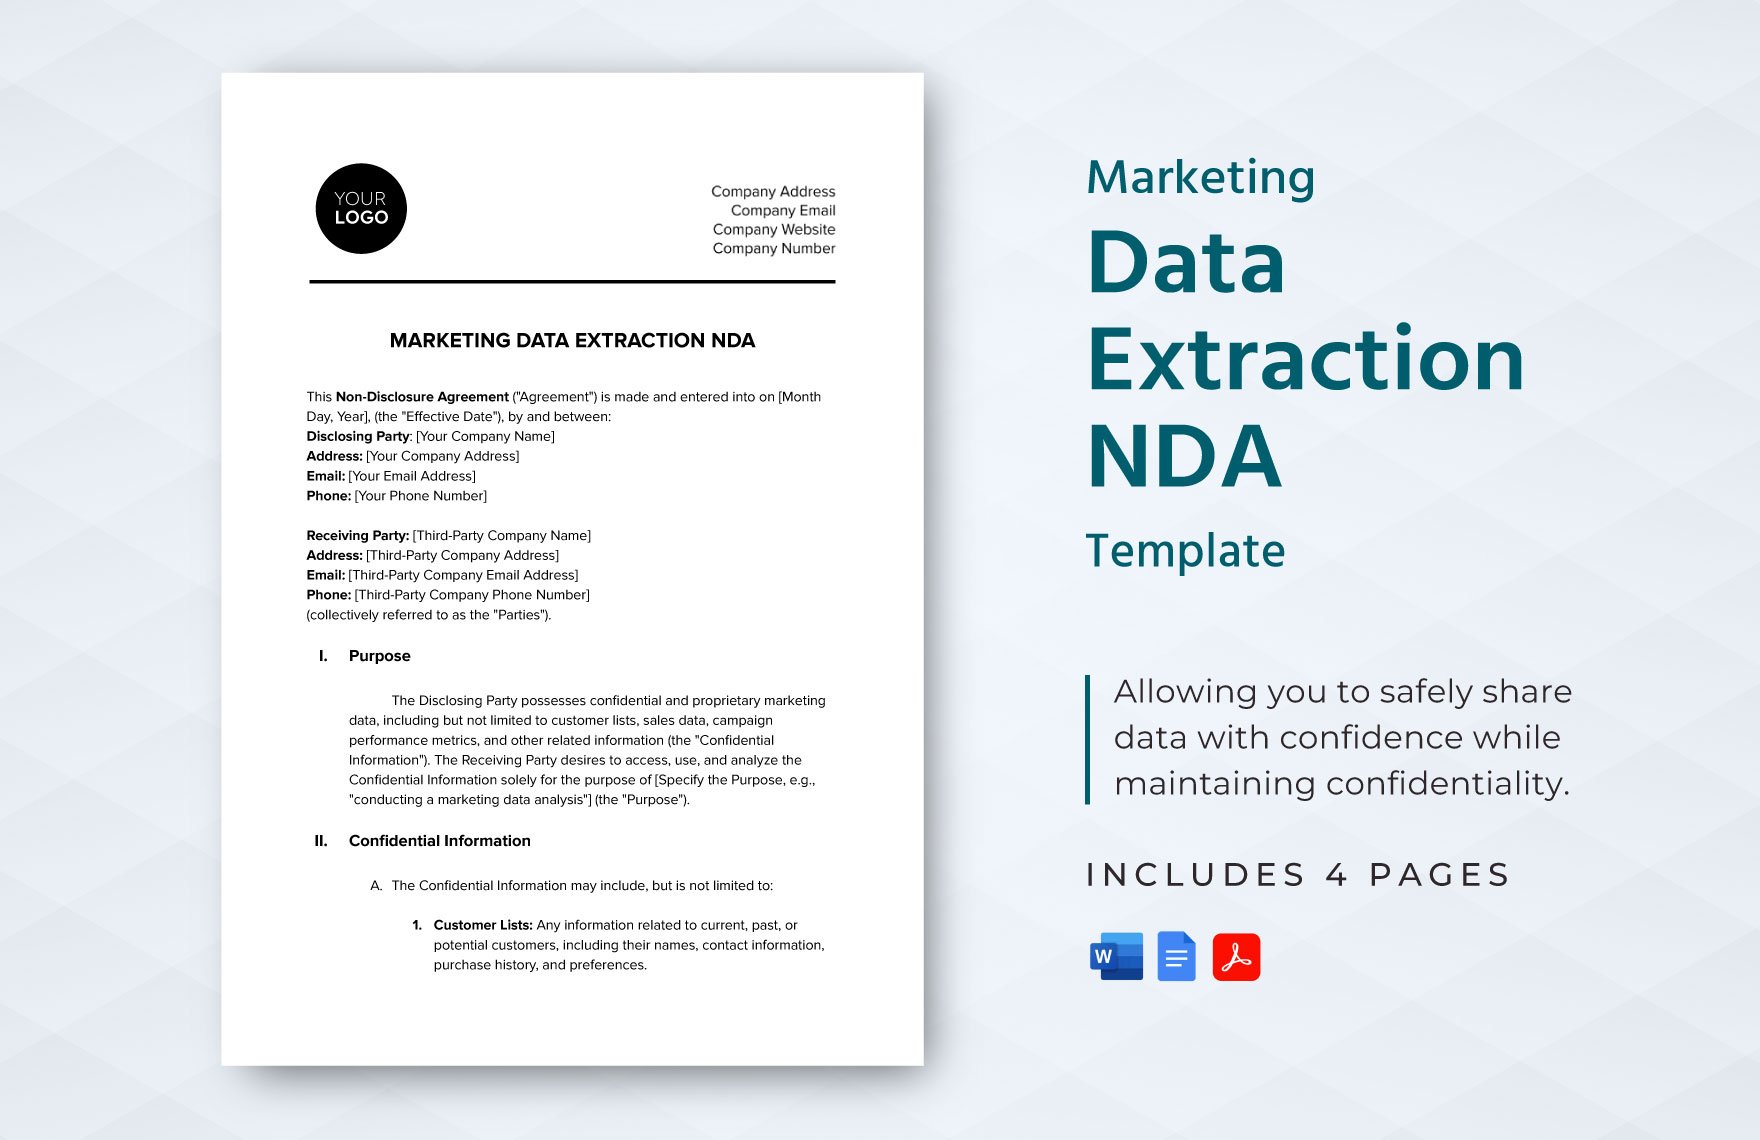 Marketing Data Extraction NDA Template